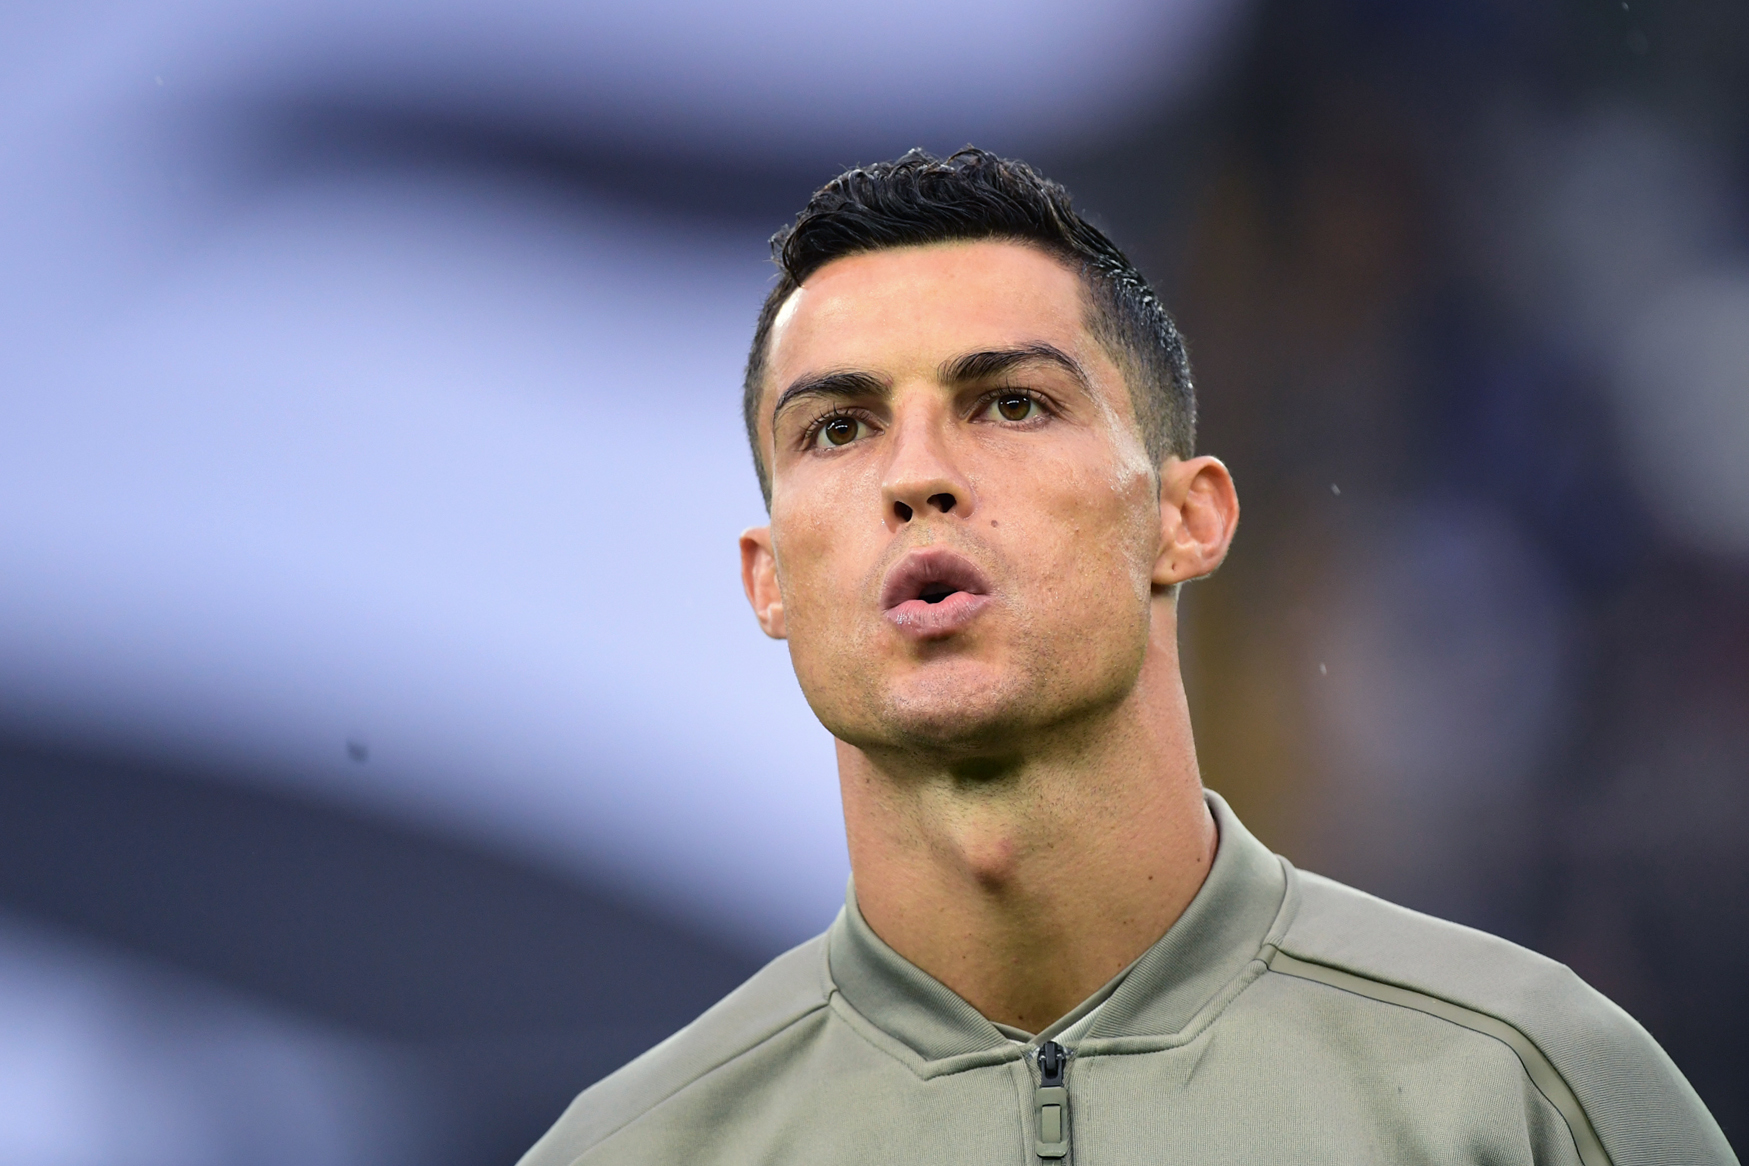 Gesto de Cristiano Ronaldo a imitar Simeone custa-lhe 20 mil euros